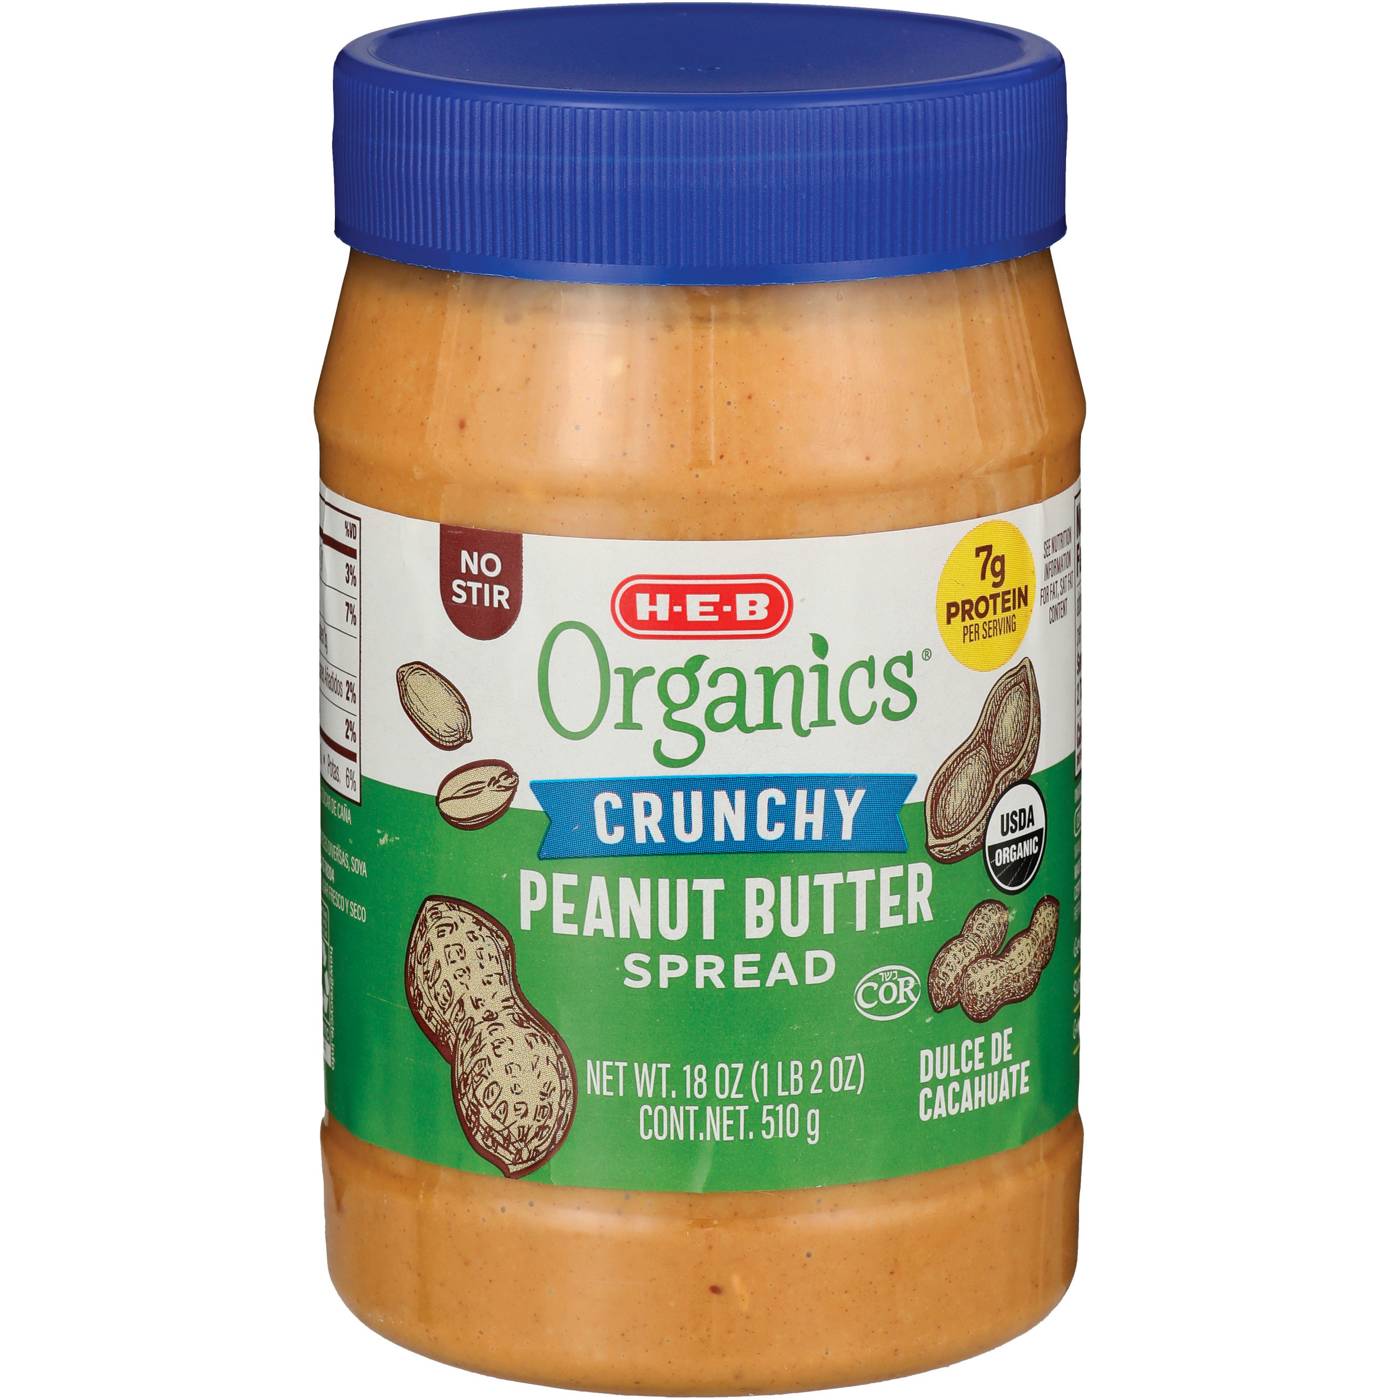 H-E-B Organics 7g Protein Crunchy Peanut Butter; image 2 of 2